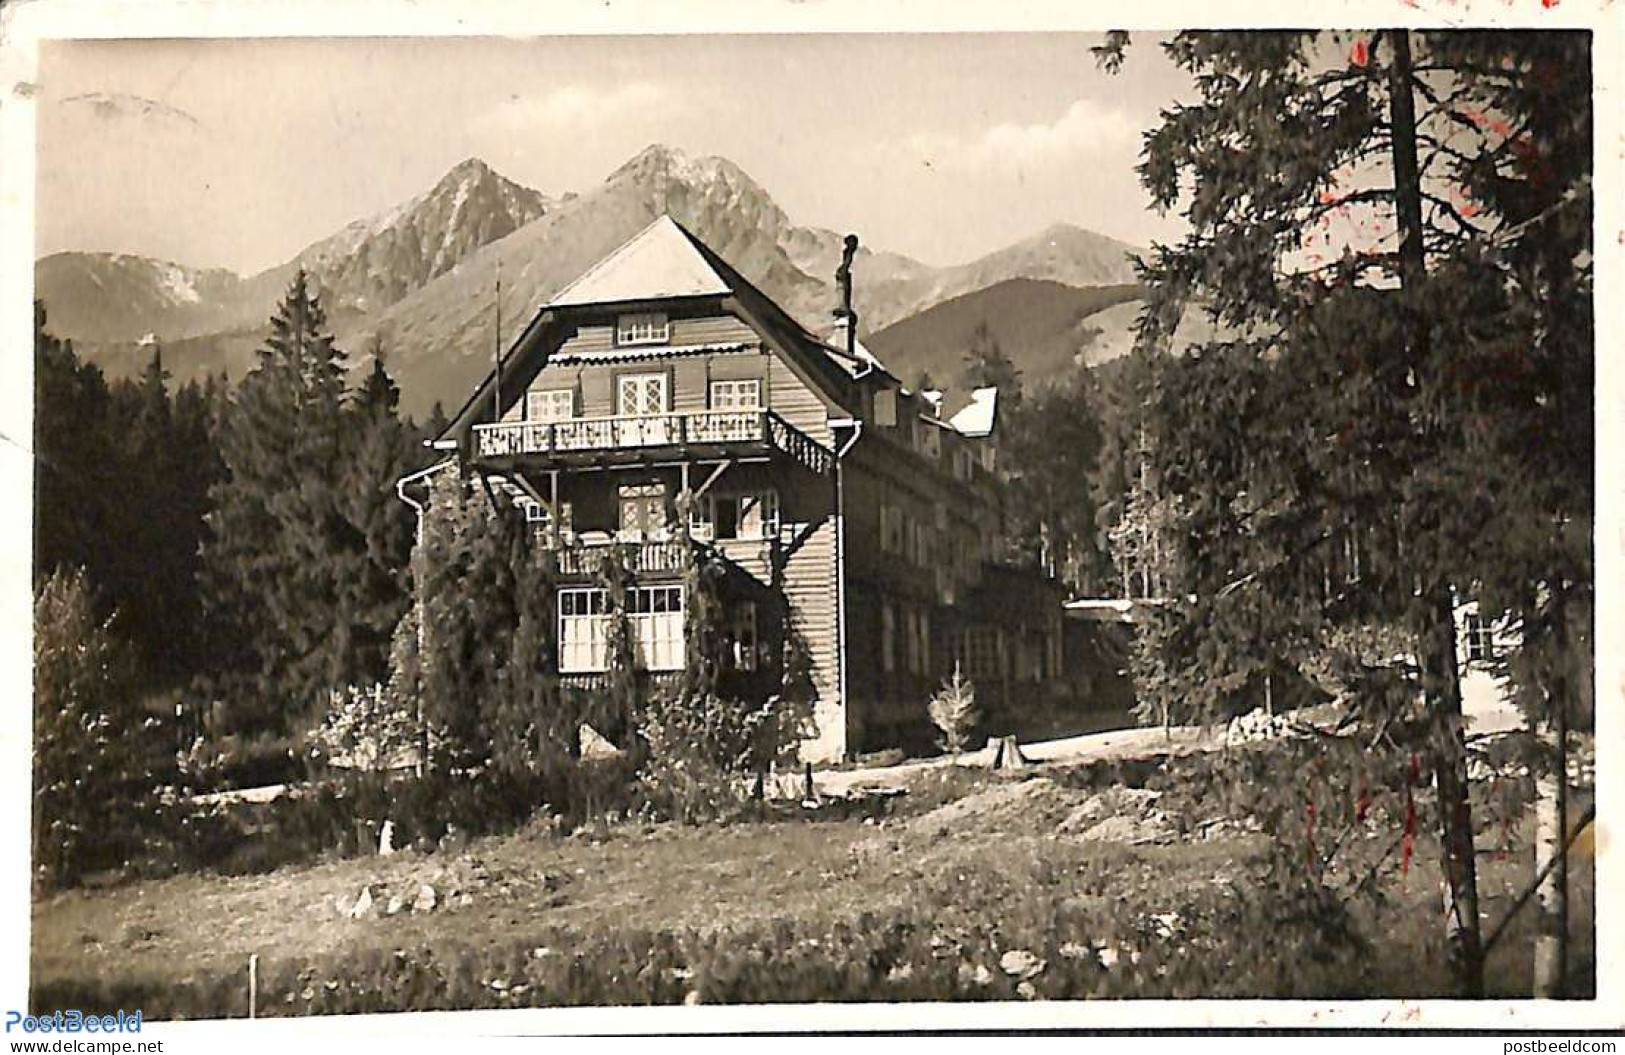 Slovakia 1942 Postcard From Tatranska Lomnica To Munich, Forwarded To Berchtesgaden, Postal History - Storia Postale